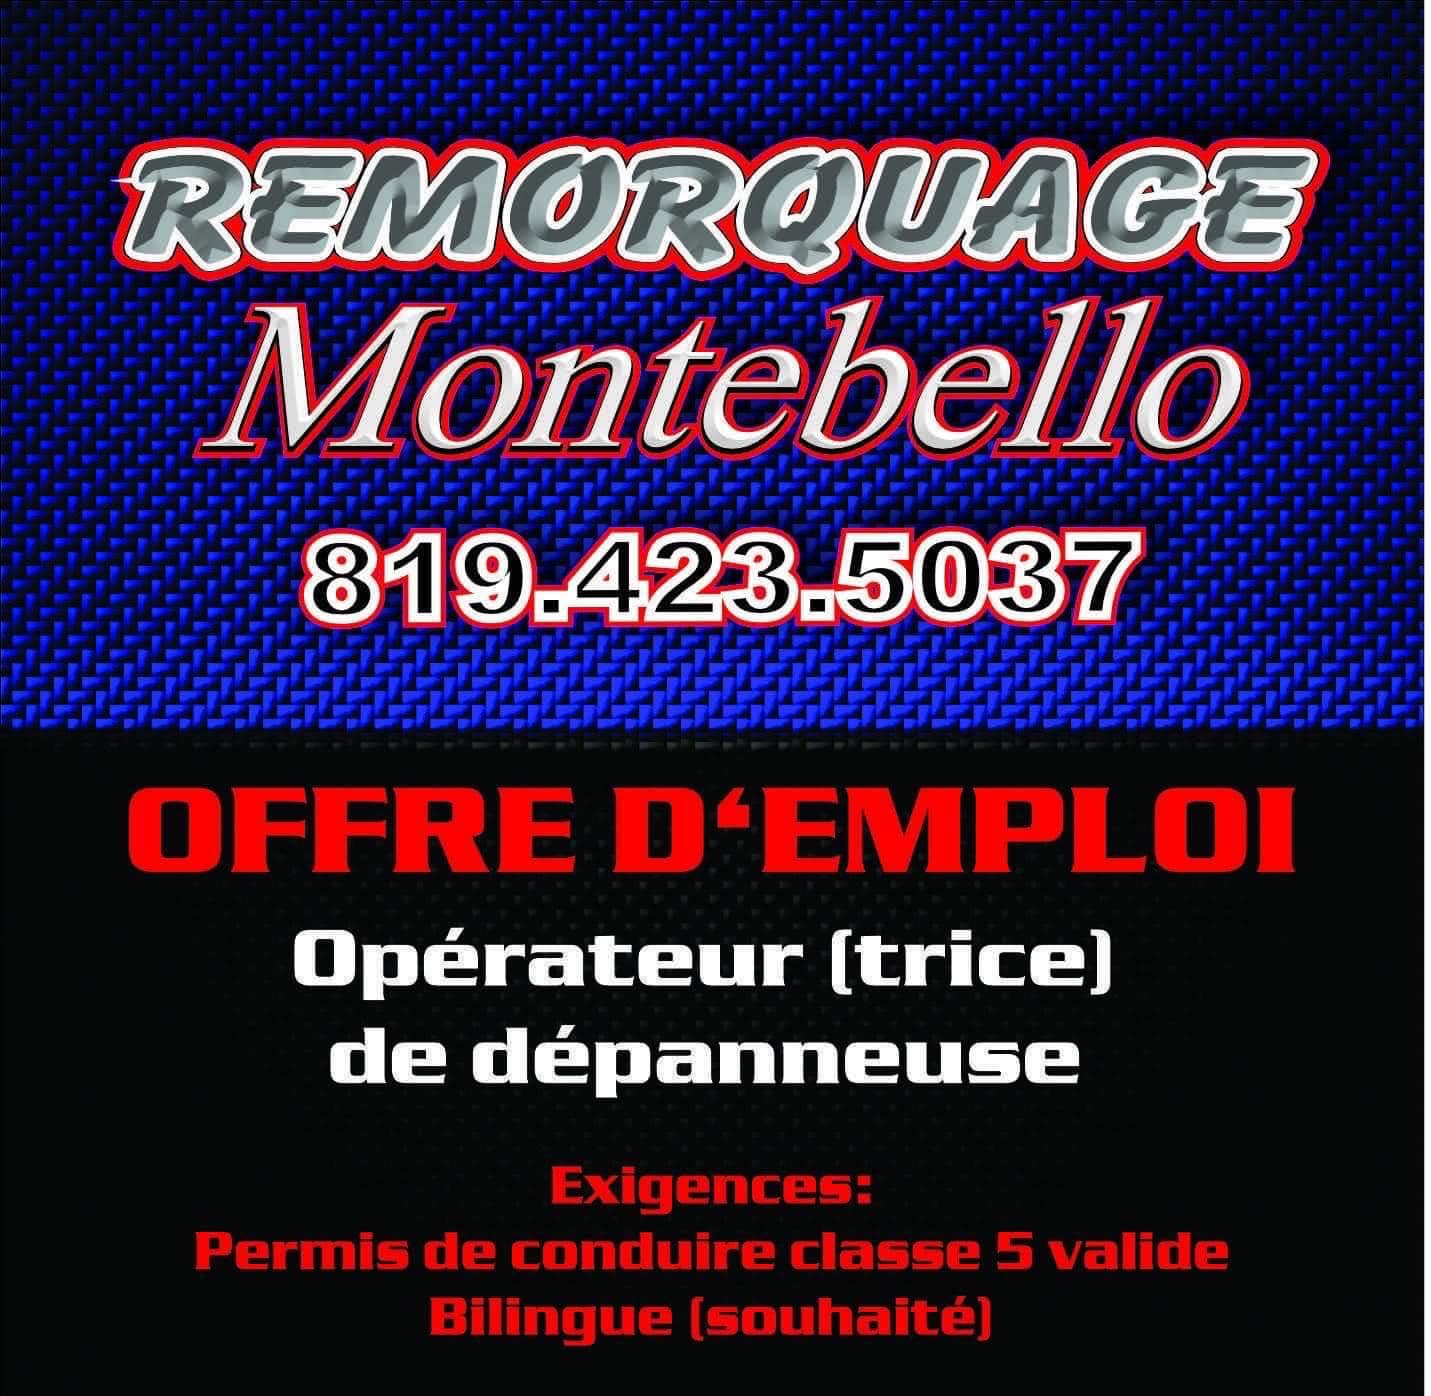 Remorquage Montebello 152 Rue Papineau, Papineauville Quebec J0V 1R0